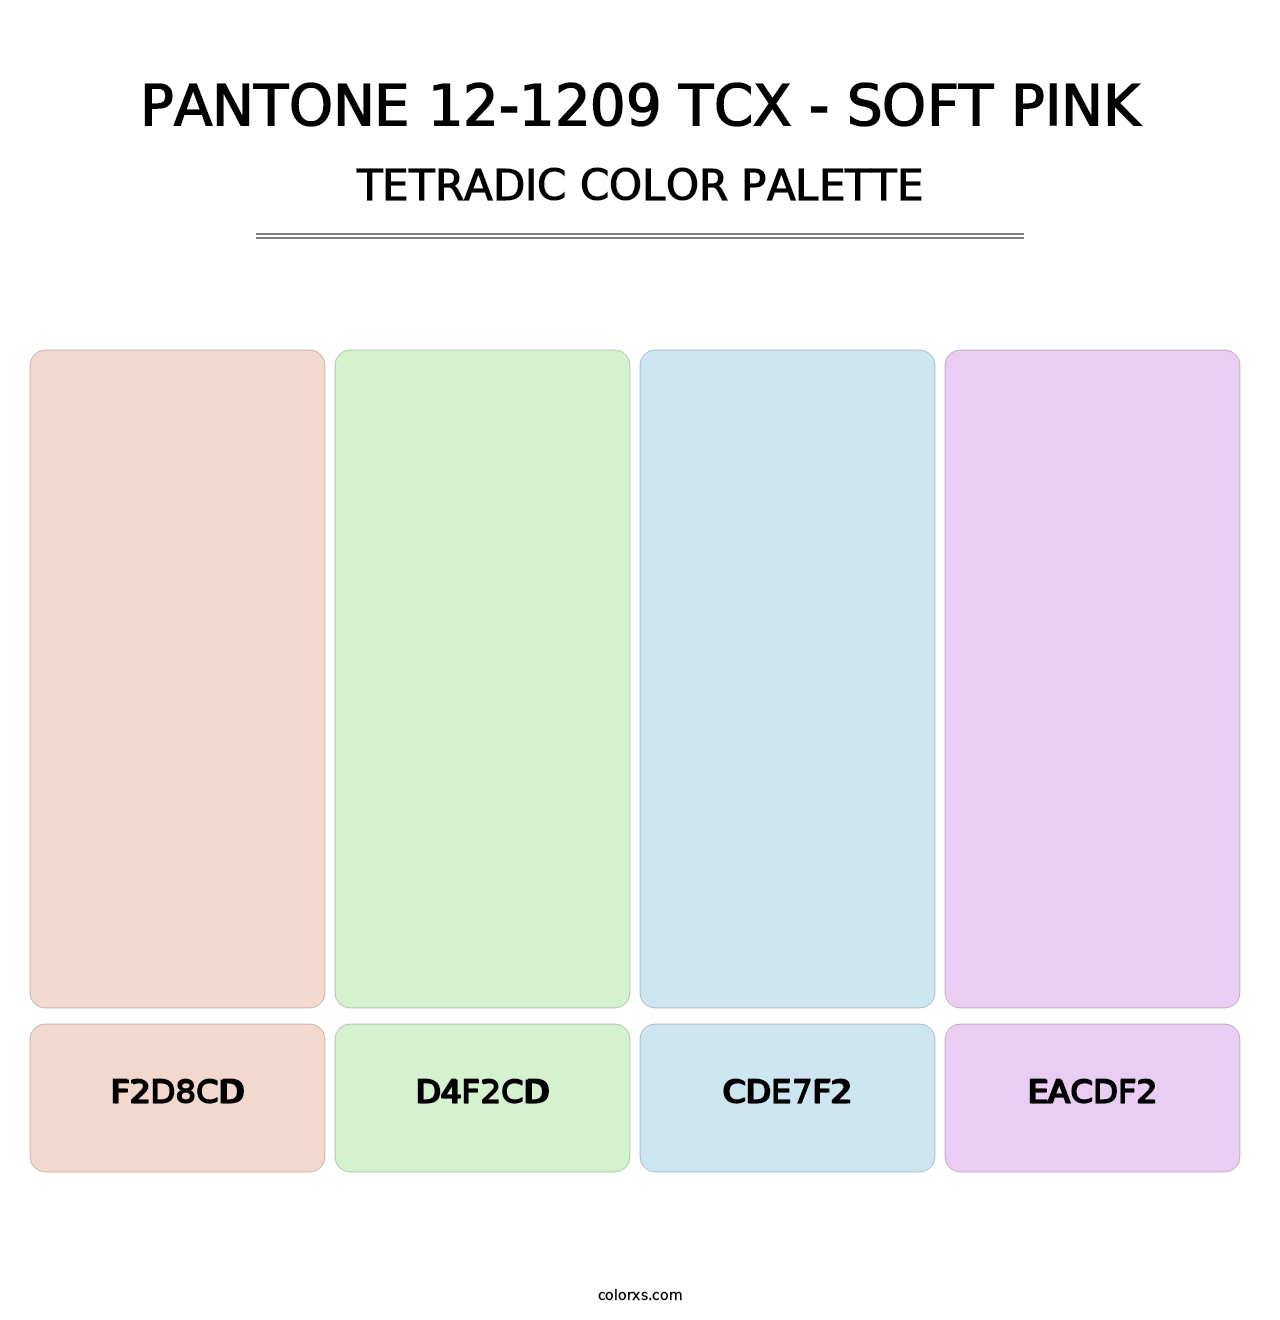 PANTONE 12-1209 TCX - Soft Pink - Tetradic Color Palette